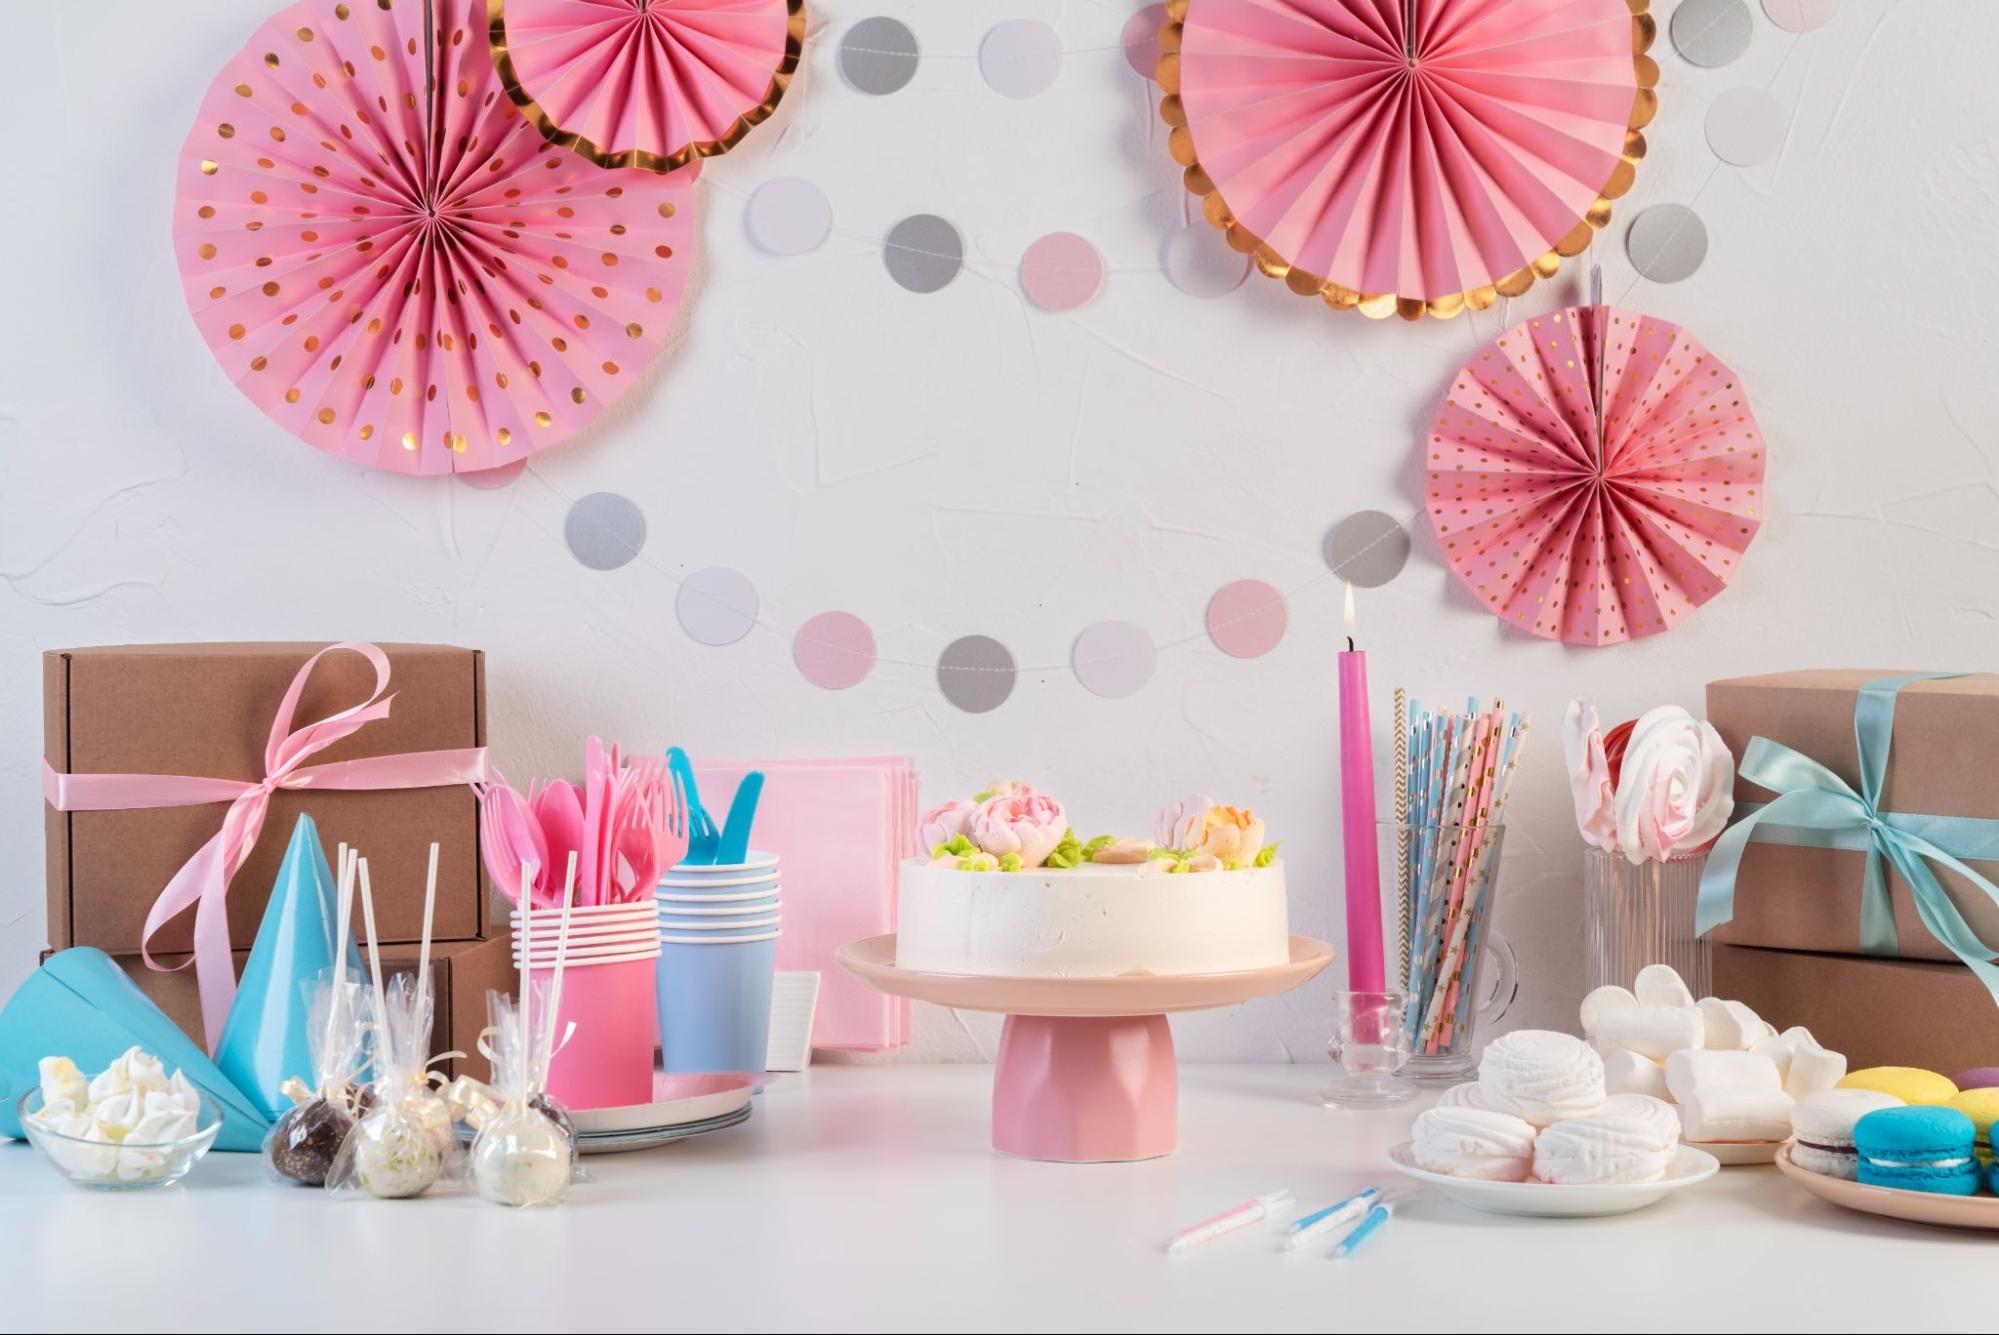 Themed Table Settings: Creative birthday decor ideas at home